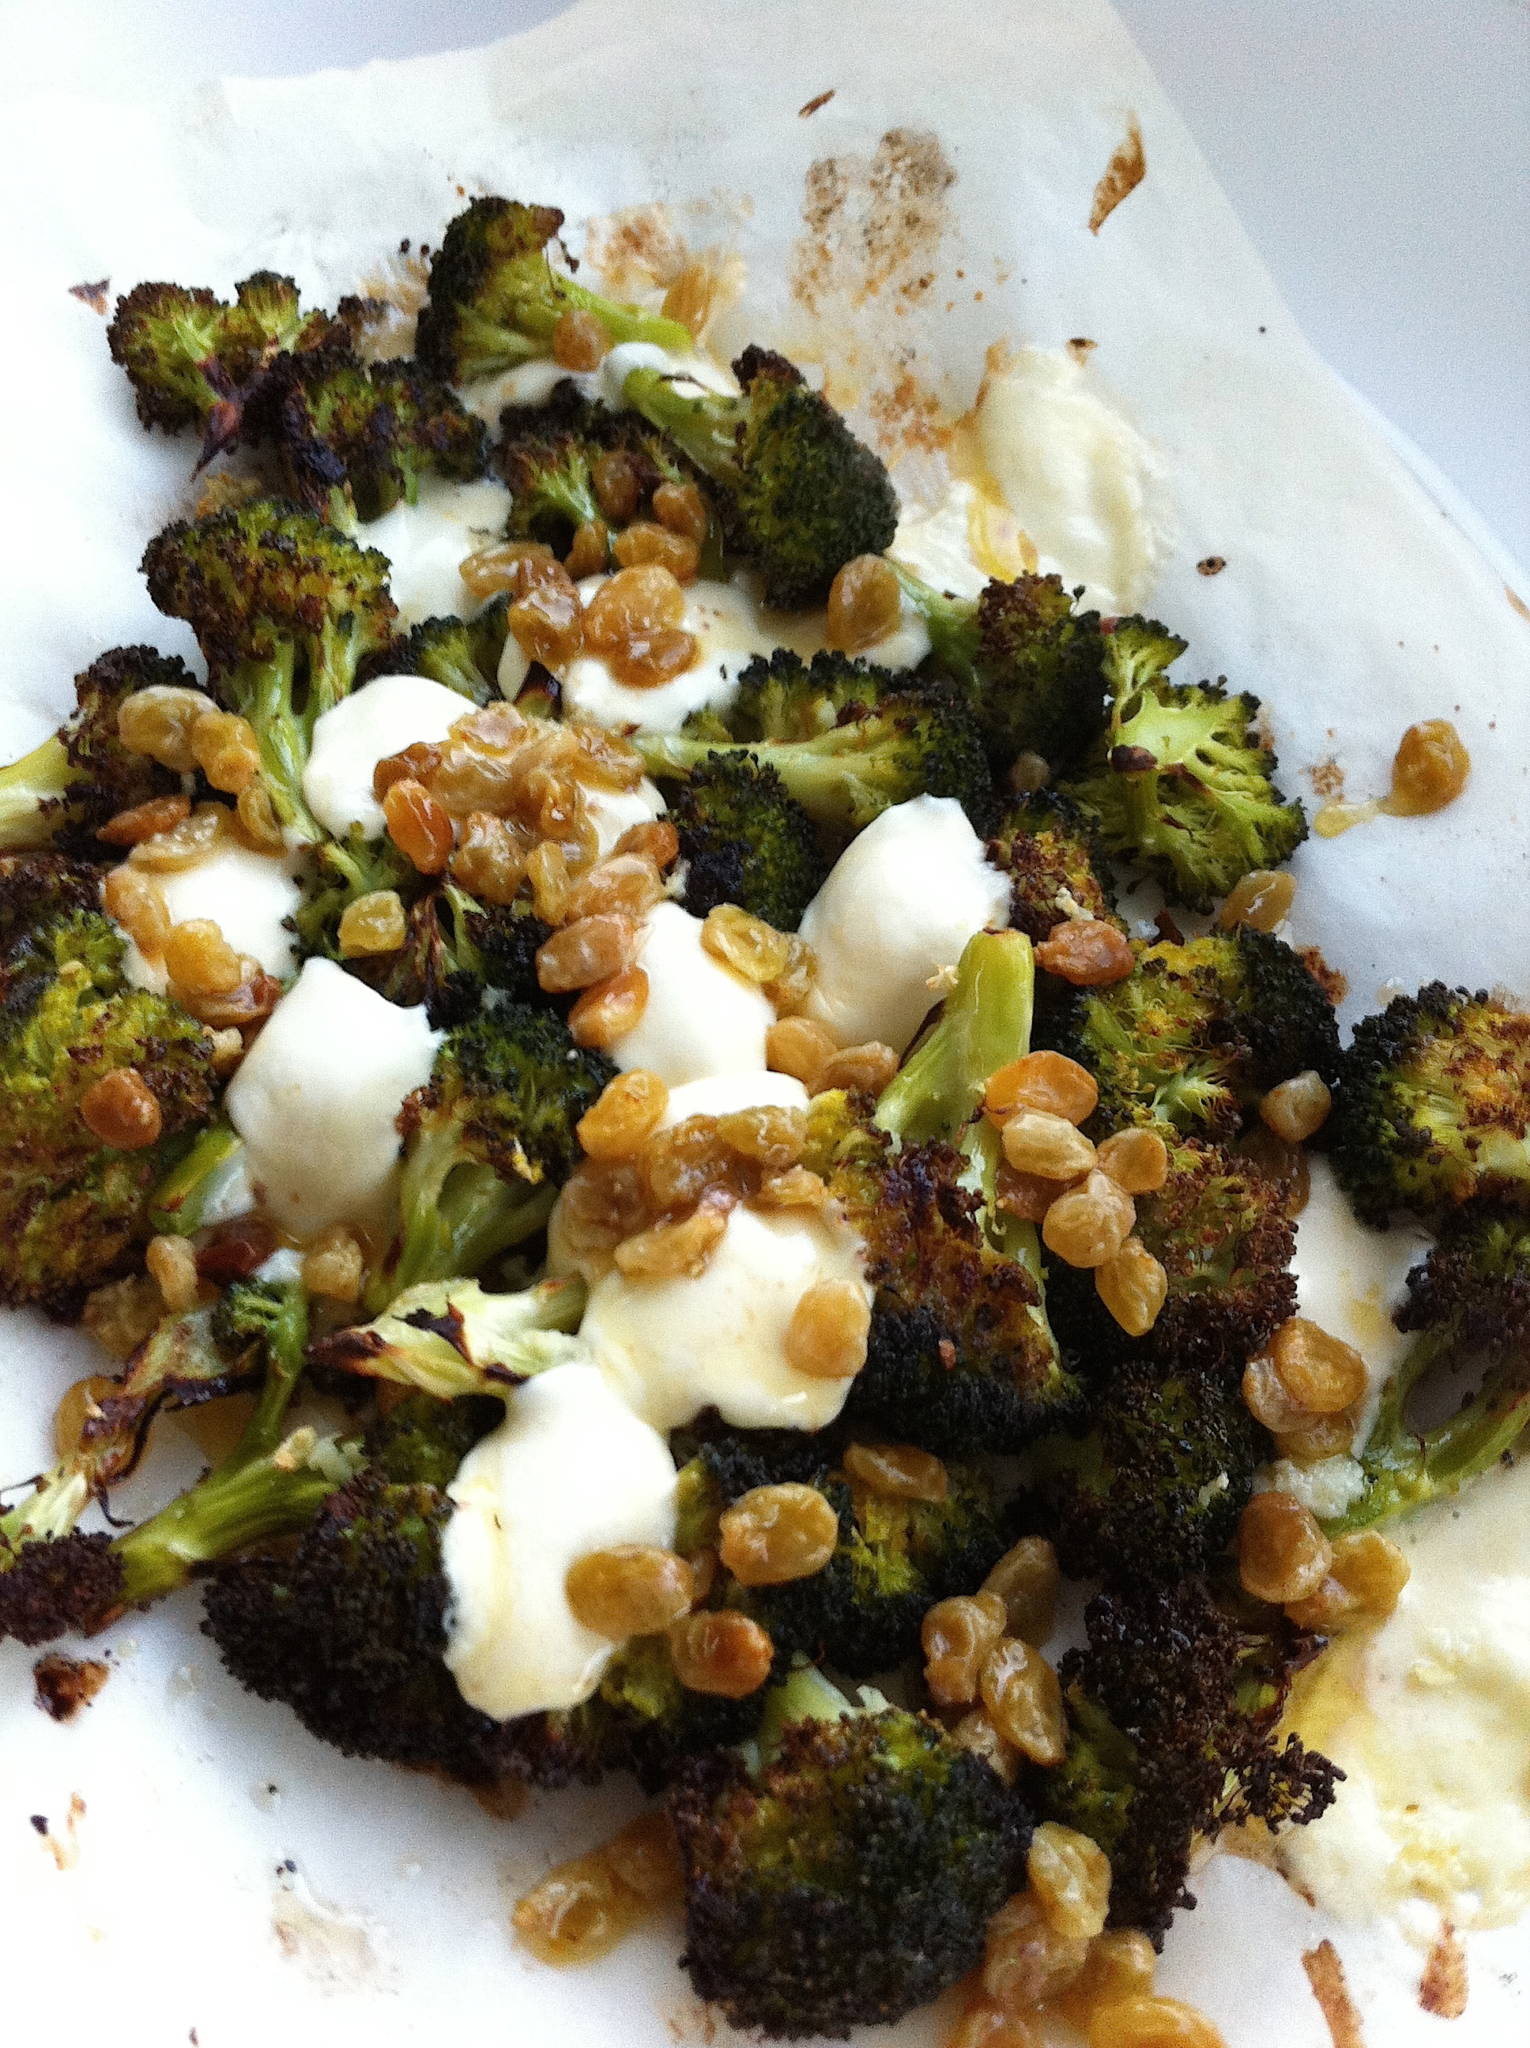 Sultanas with roasted broccoli.